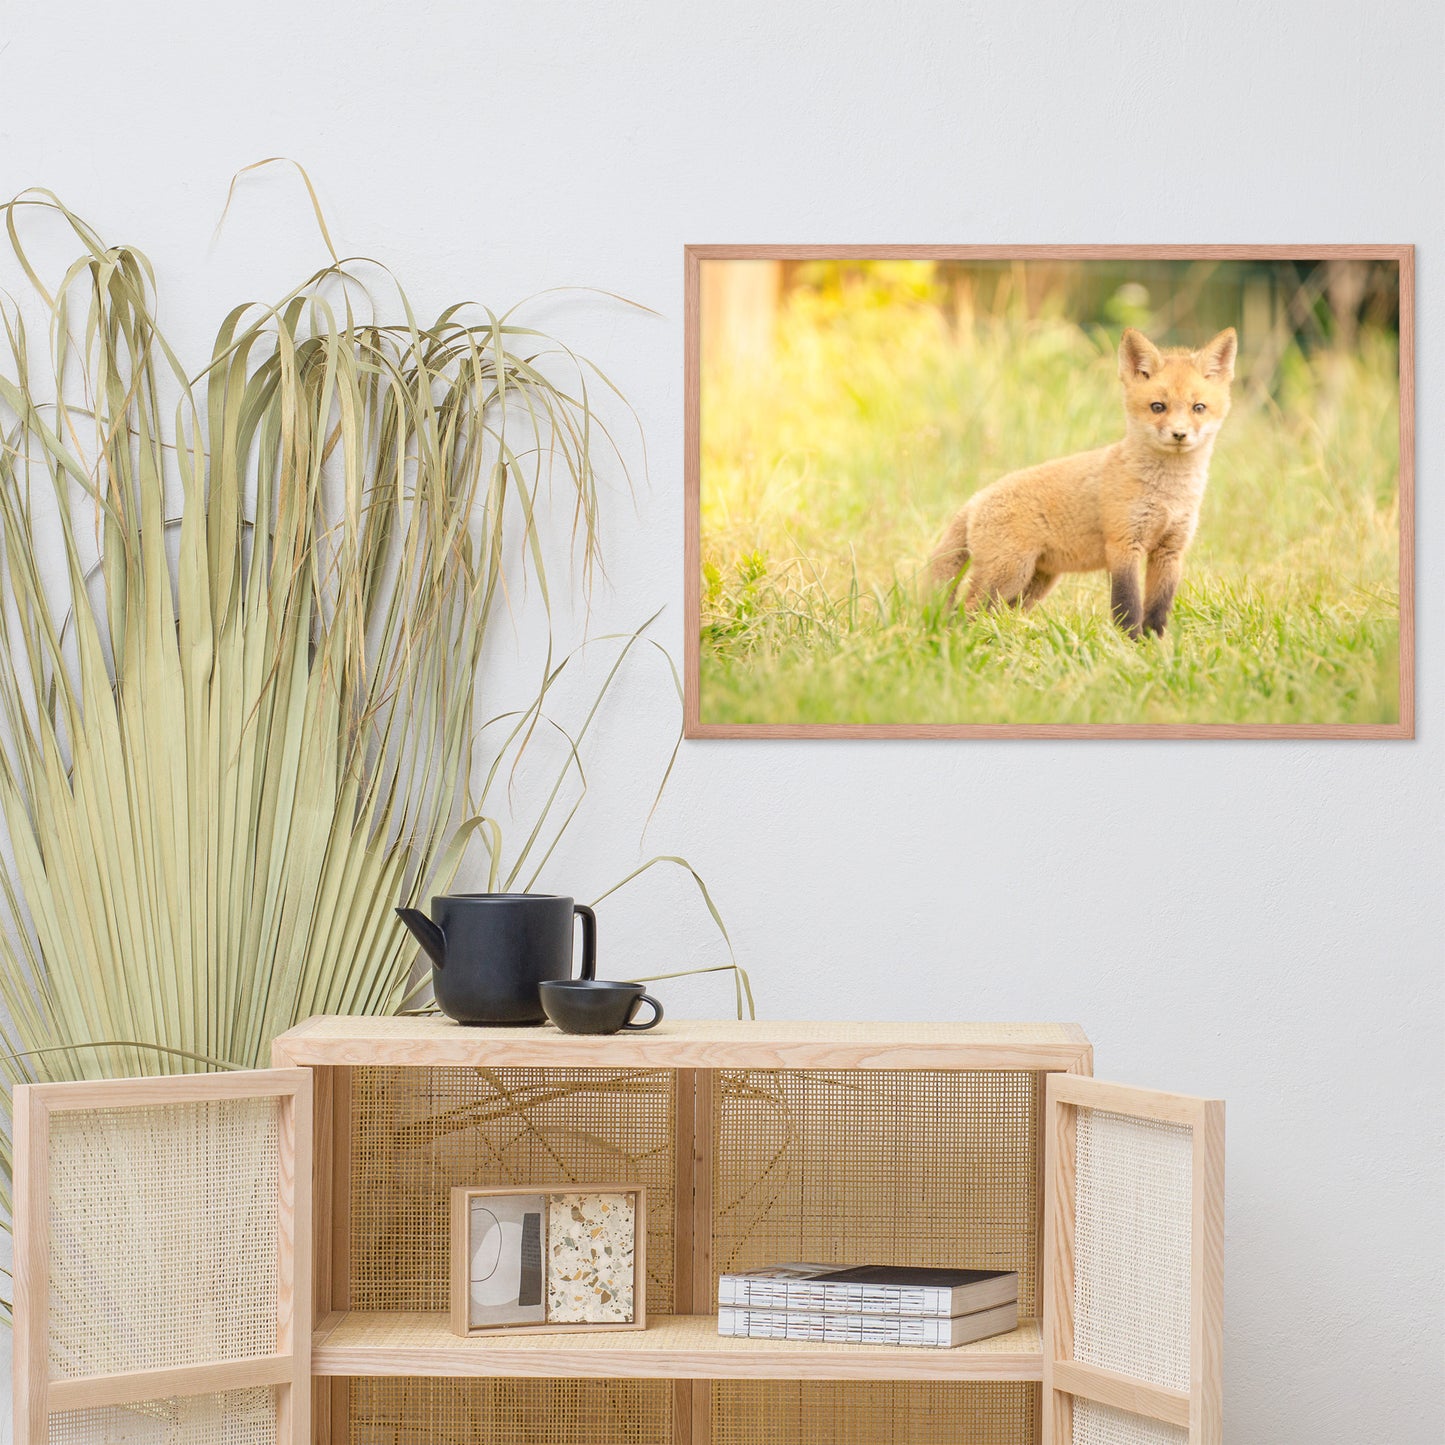 Cool Art Nursery: Baby Red Fox in the Sun - Animal / Wildlife / Nature Artwork - Wall Decor - Framed Wall Art Print